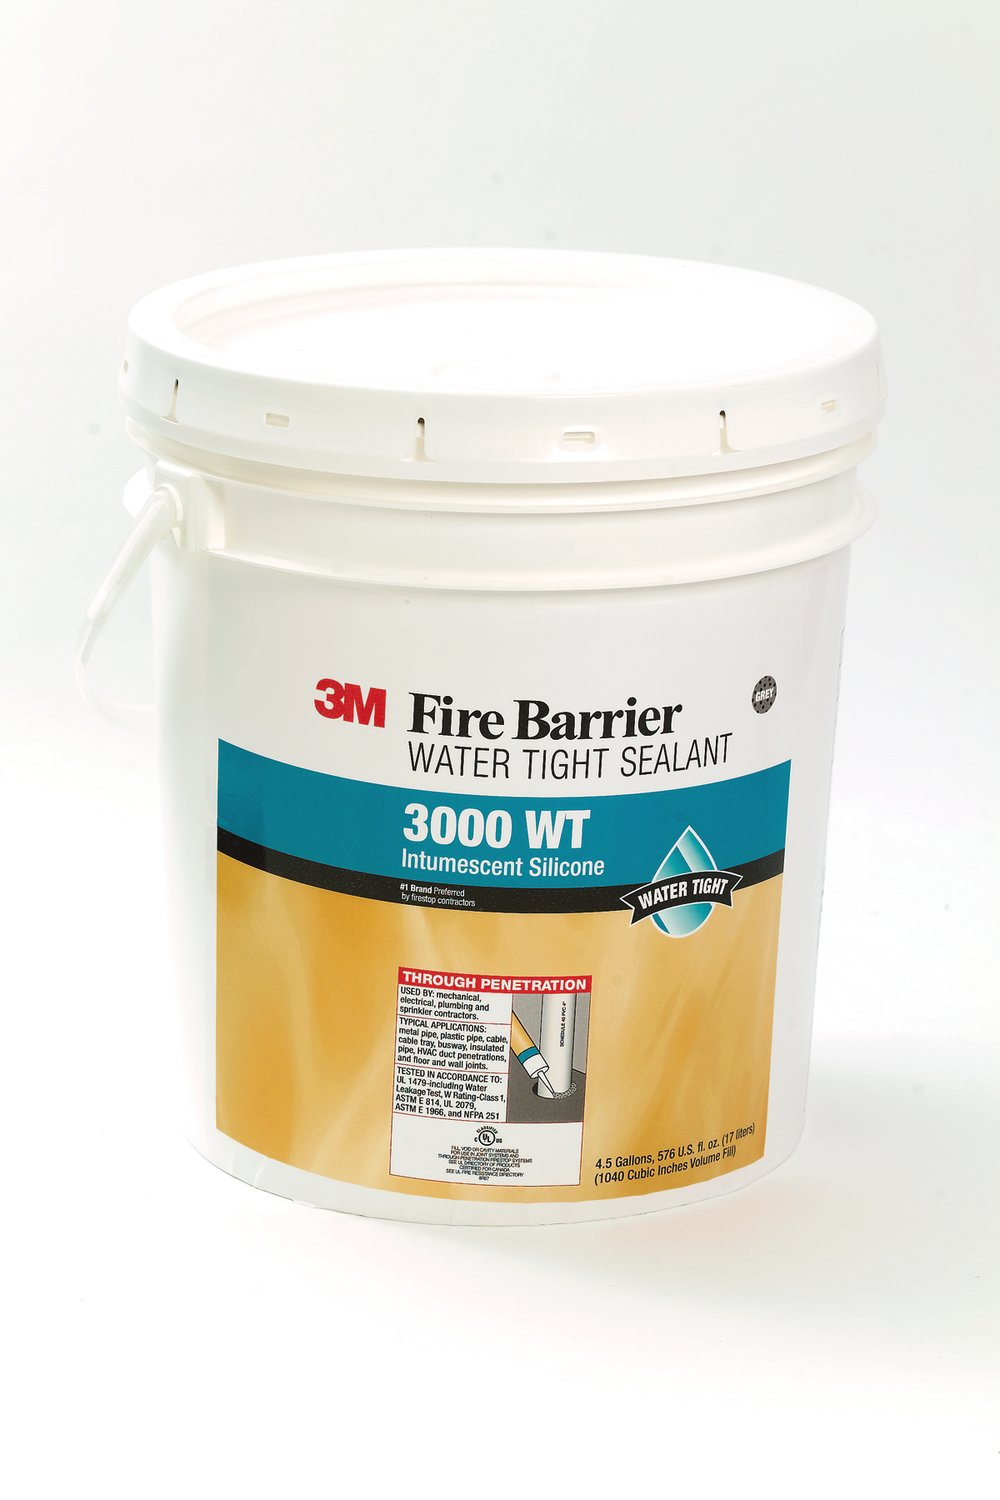 7100006306 - 3M Fire Barrier Water Tight Sealant 3000WT, Gray, 4.5 Gallon (Pail), 1
Bottle/Case